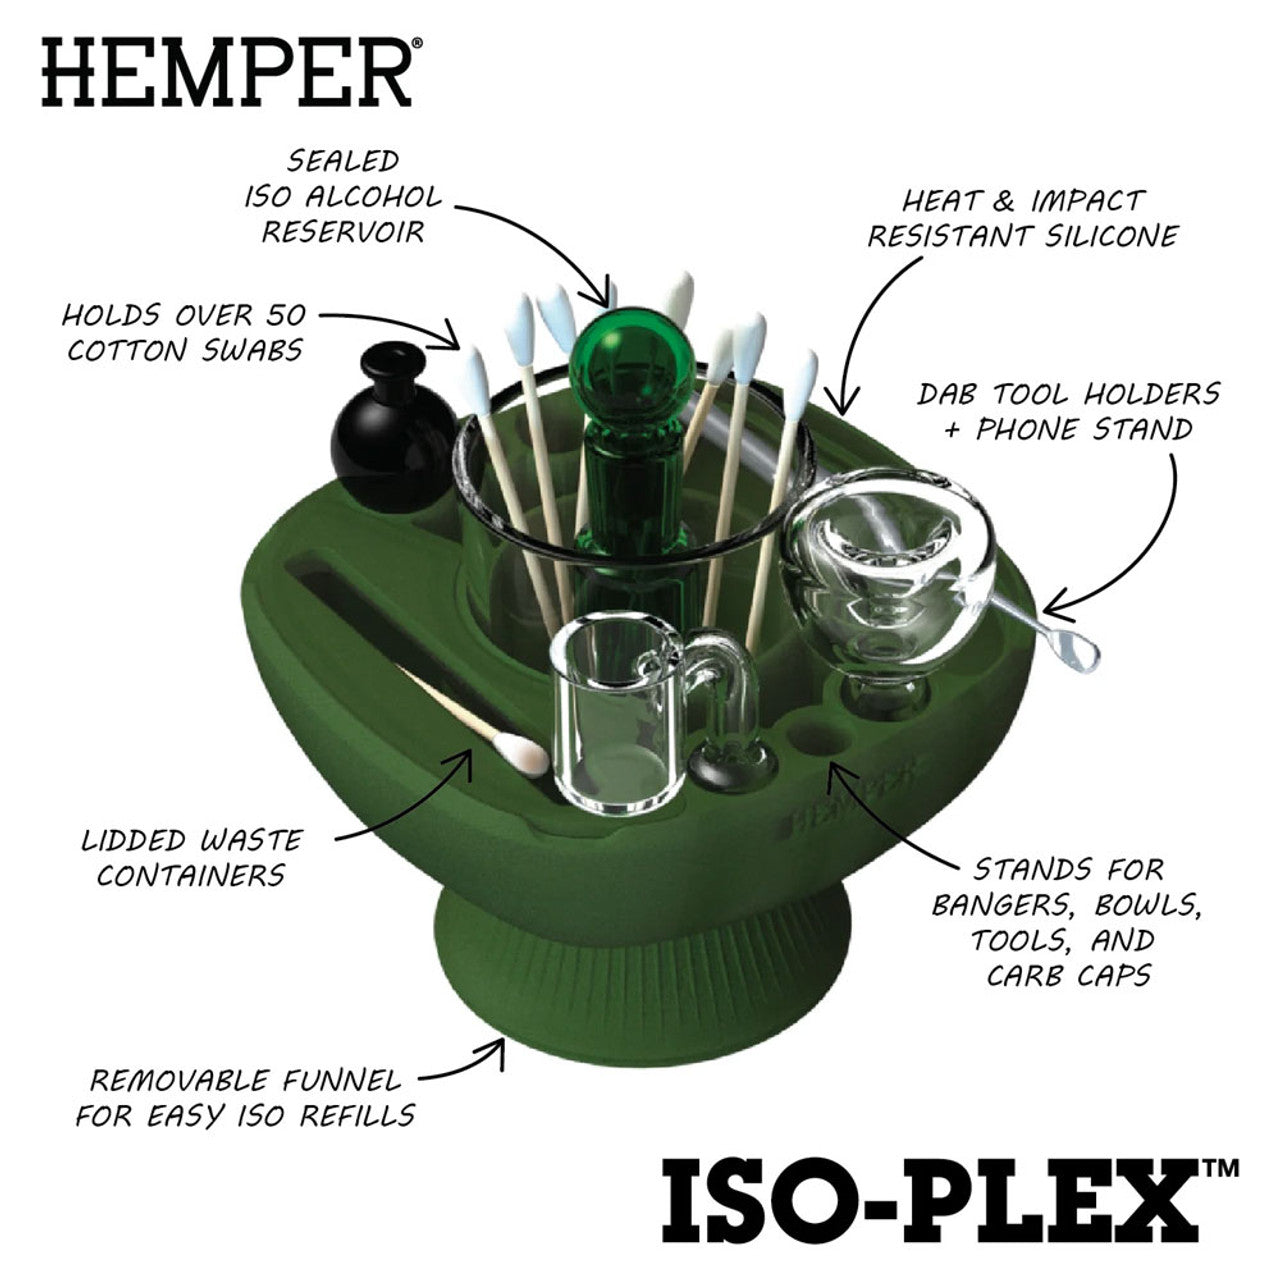 HEMPER ISO-PLEX ISOPROPYL CLEANING STATION